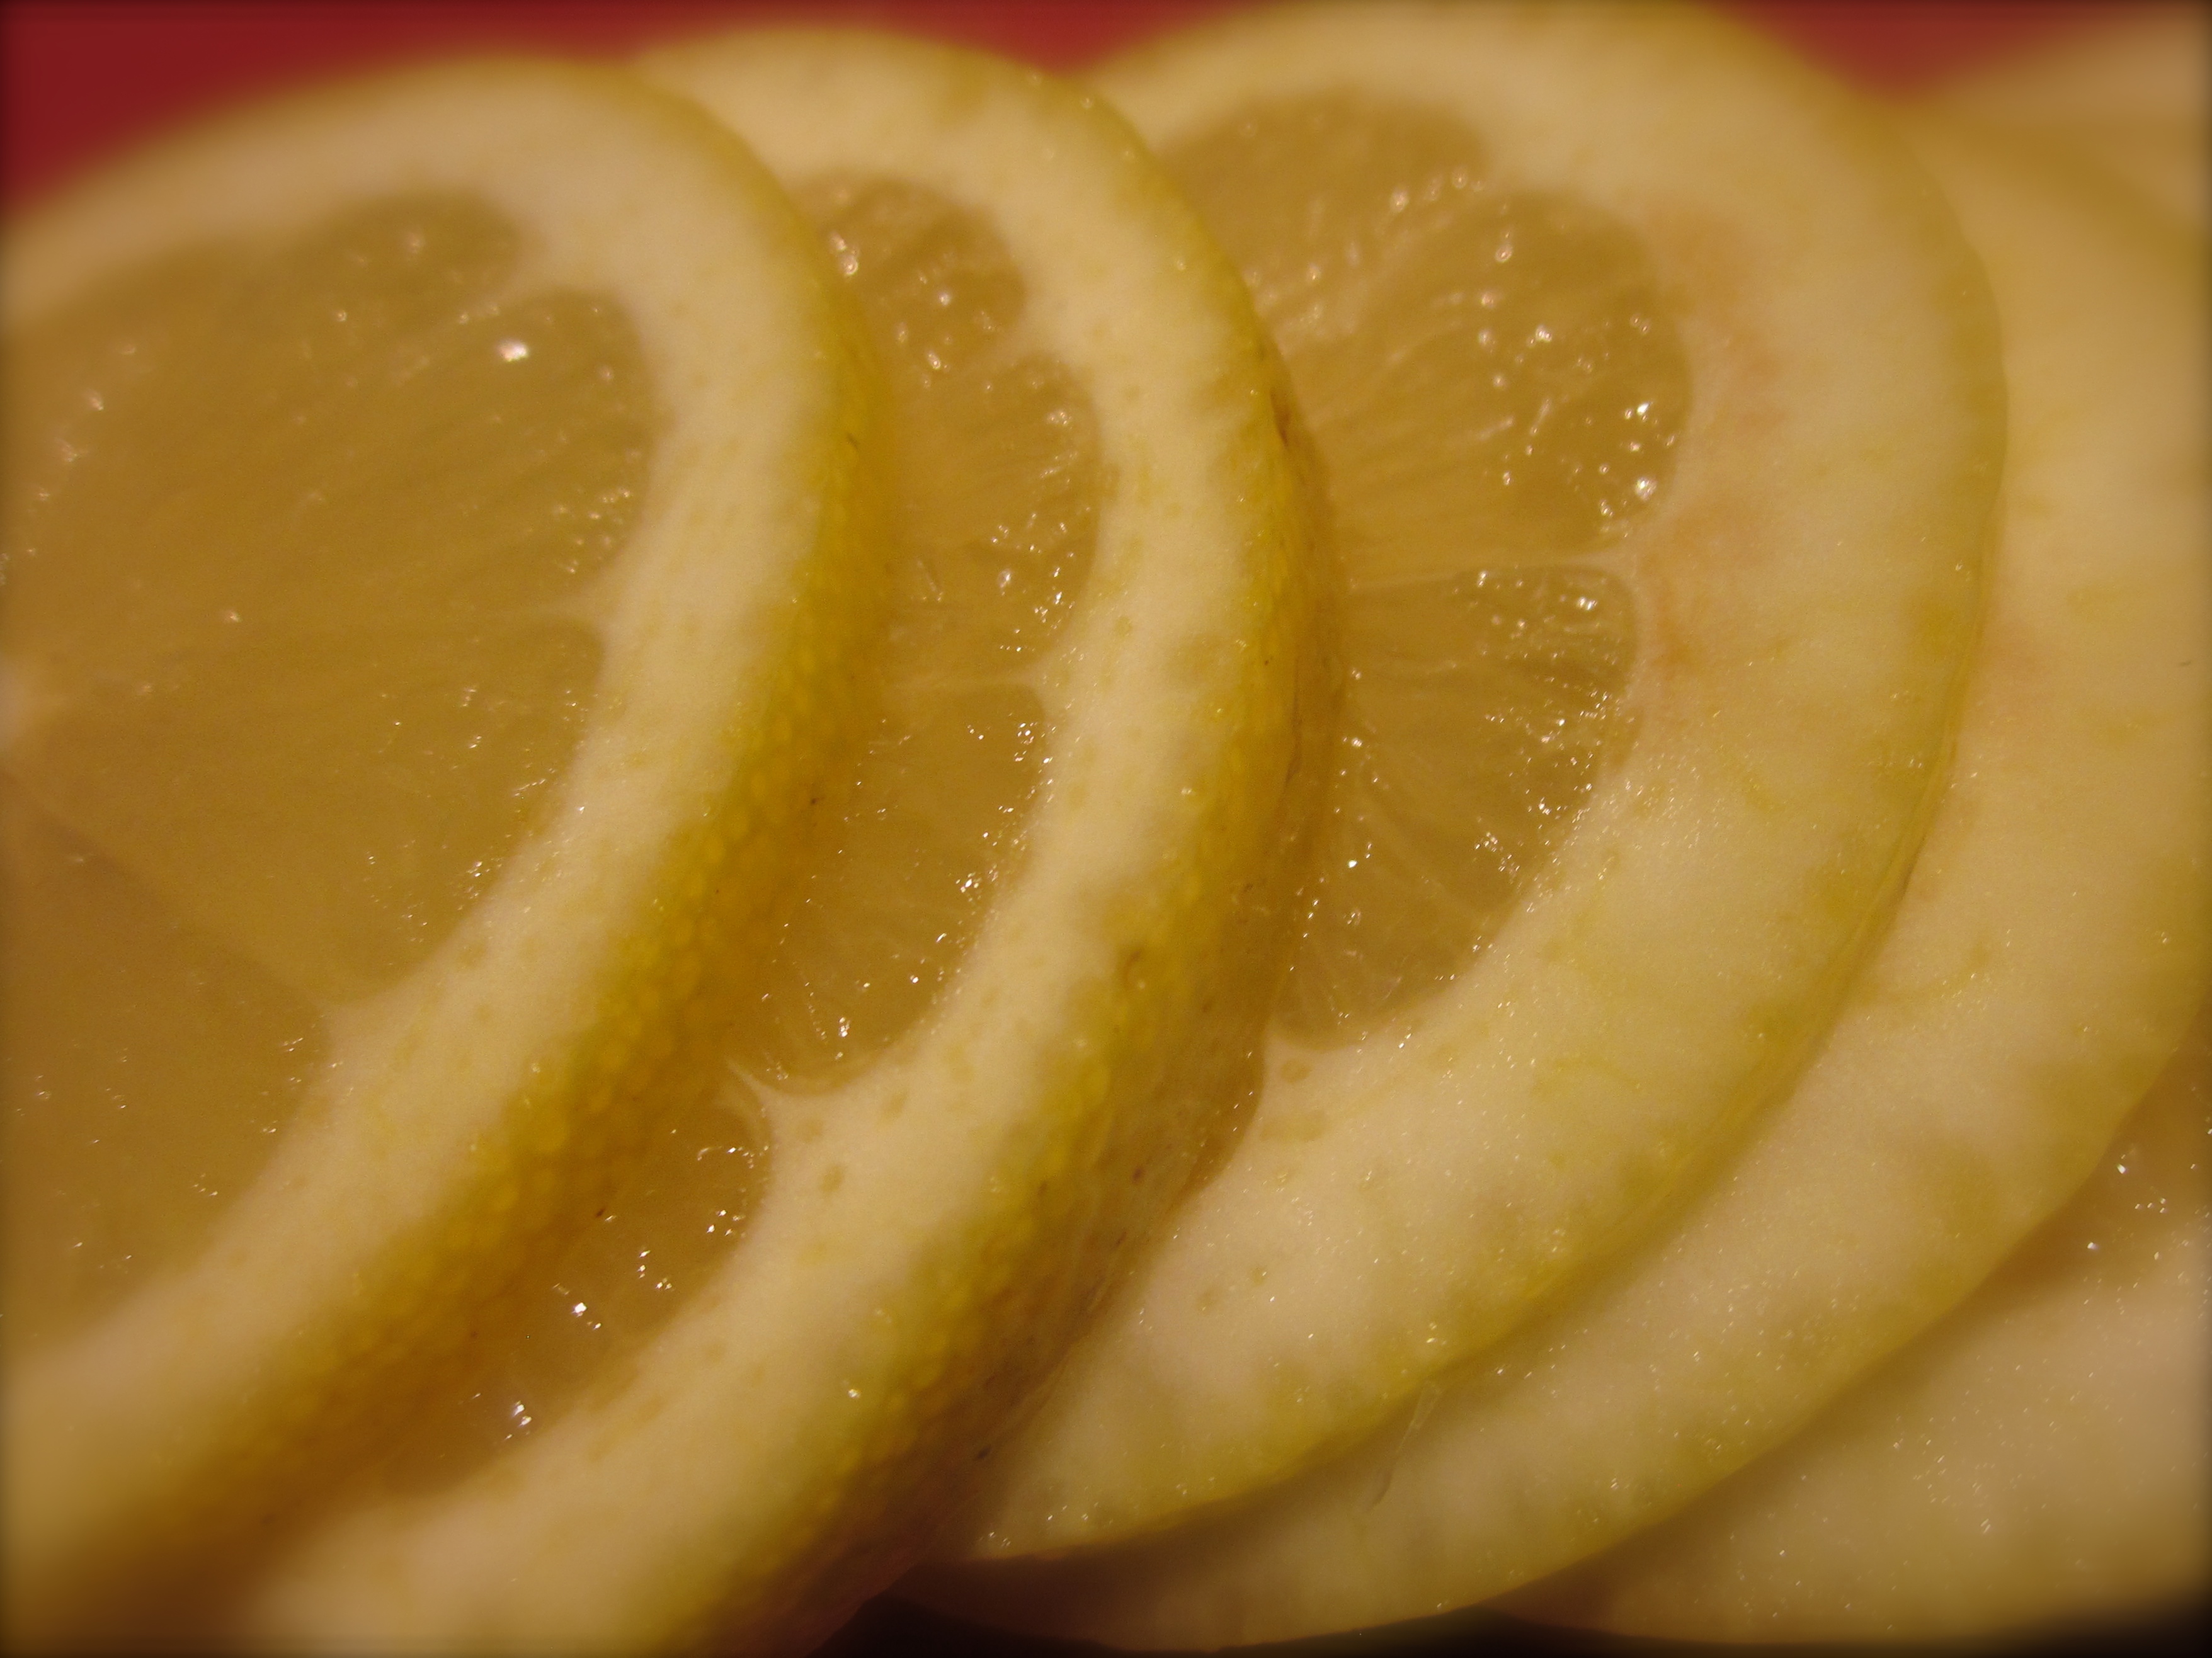 To prepare the preserved lemons, first slice.